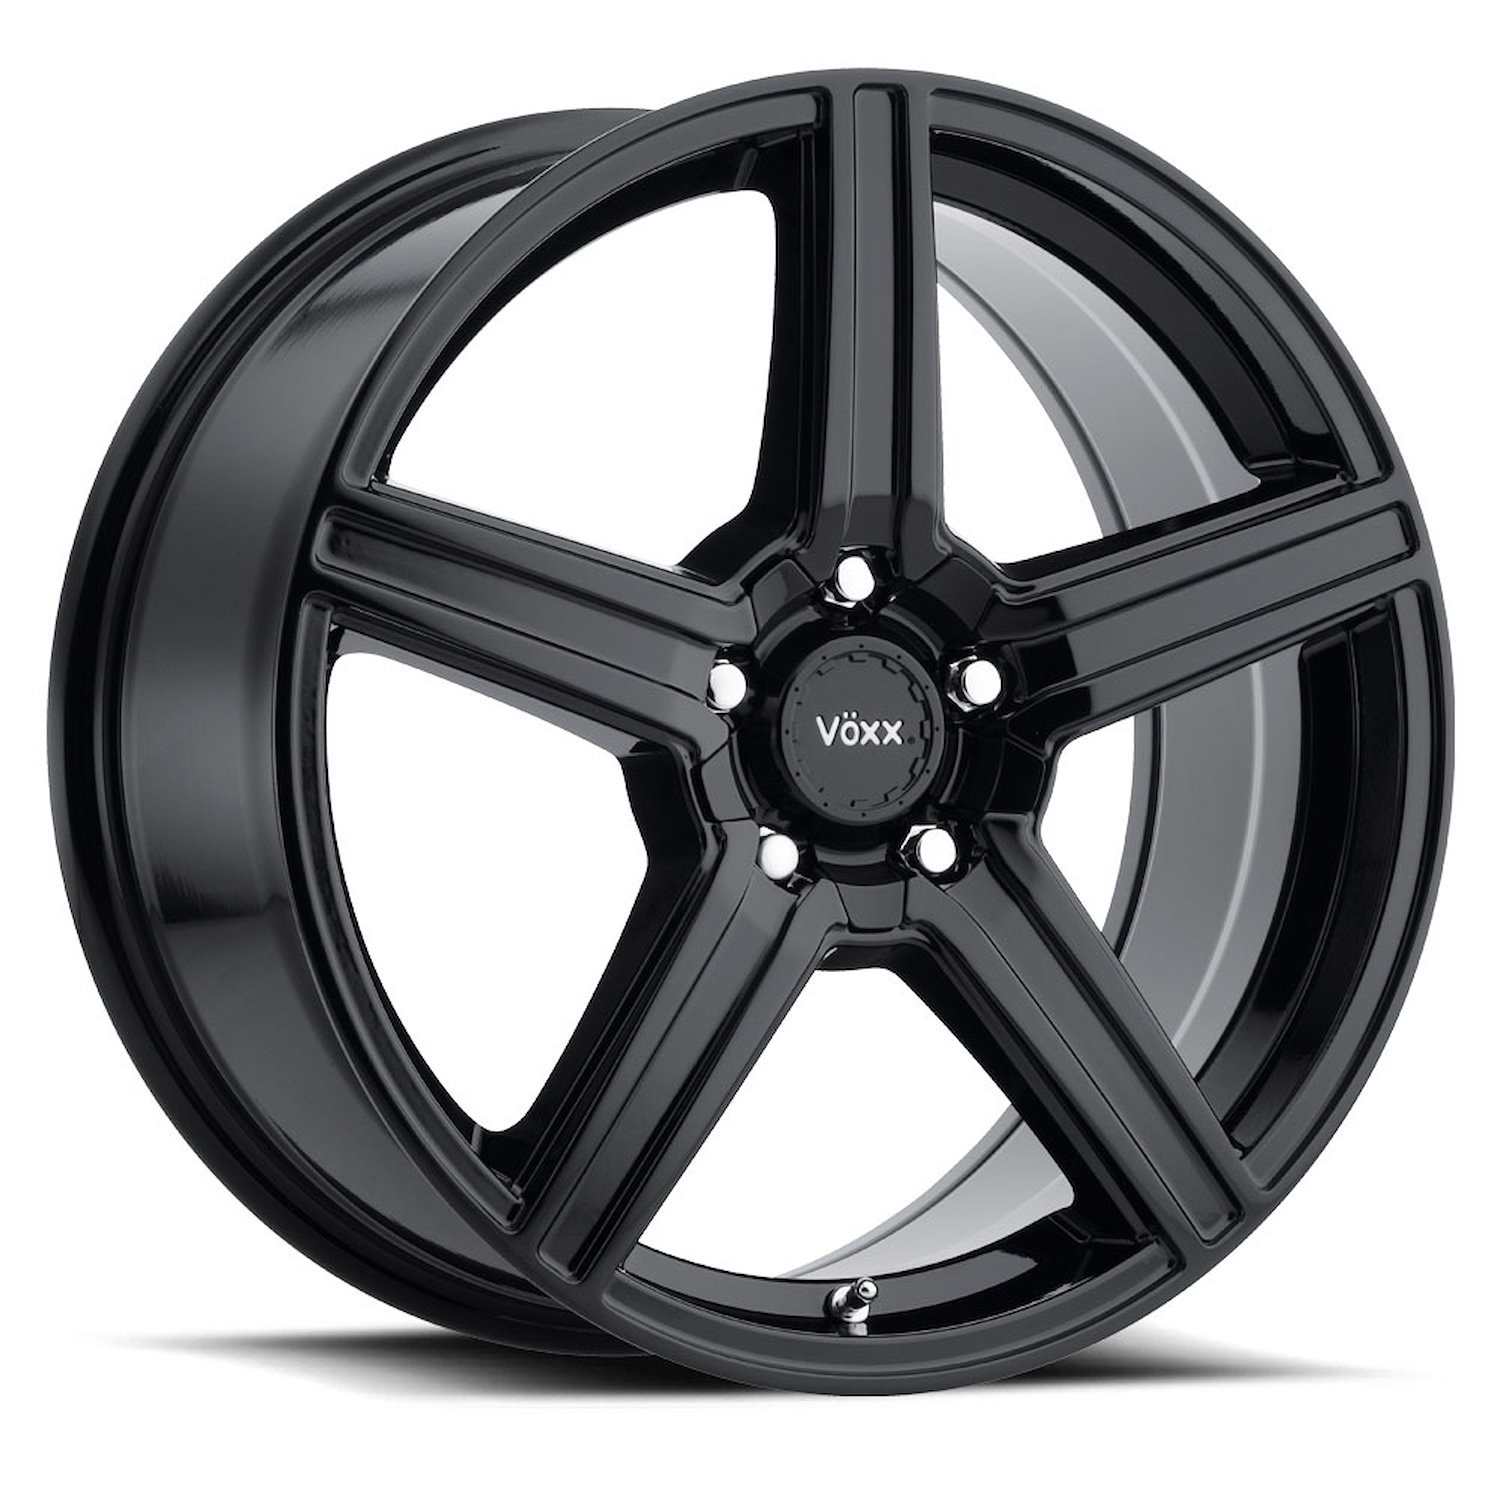 COM 670-5008-40 GB Como Wheel [Size: 16" x 7"] Finish: Gloss Black